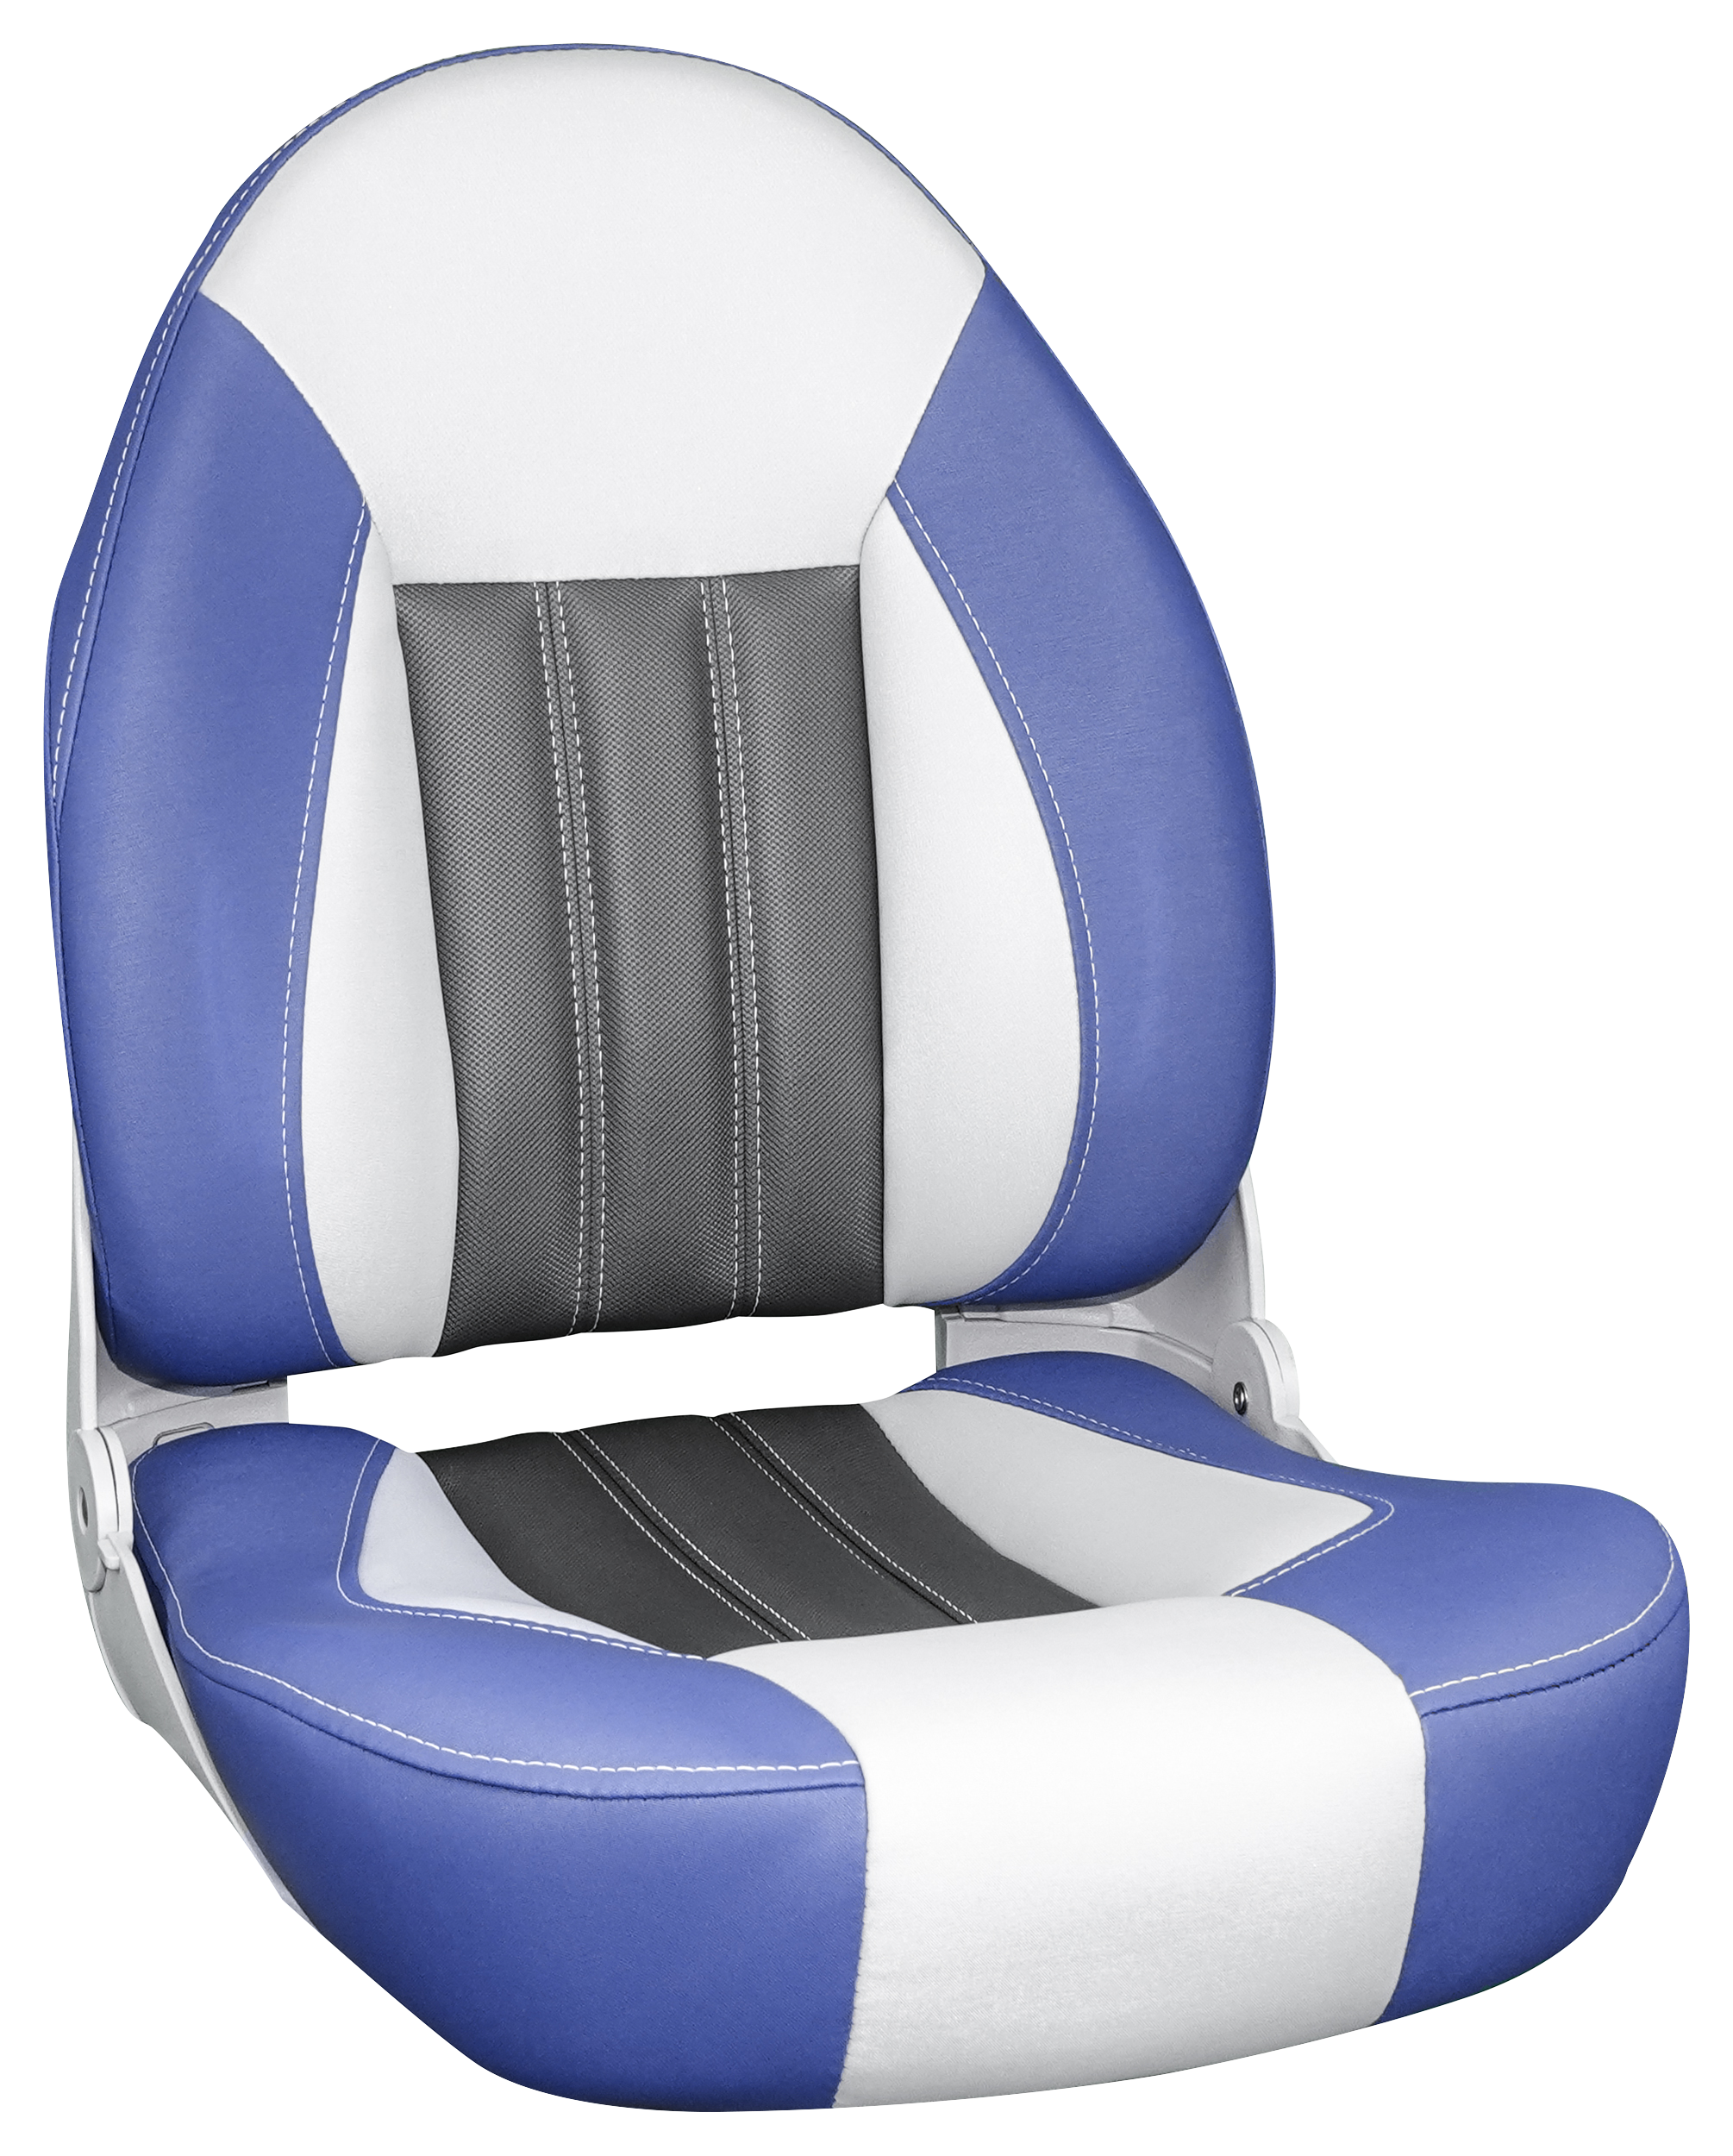 Pelican Sport Ergo360 Boat Seat with Swivel